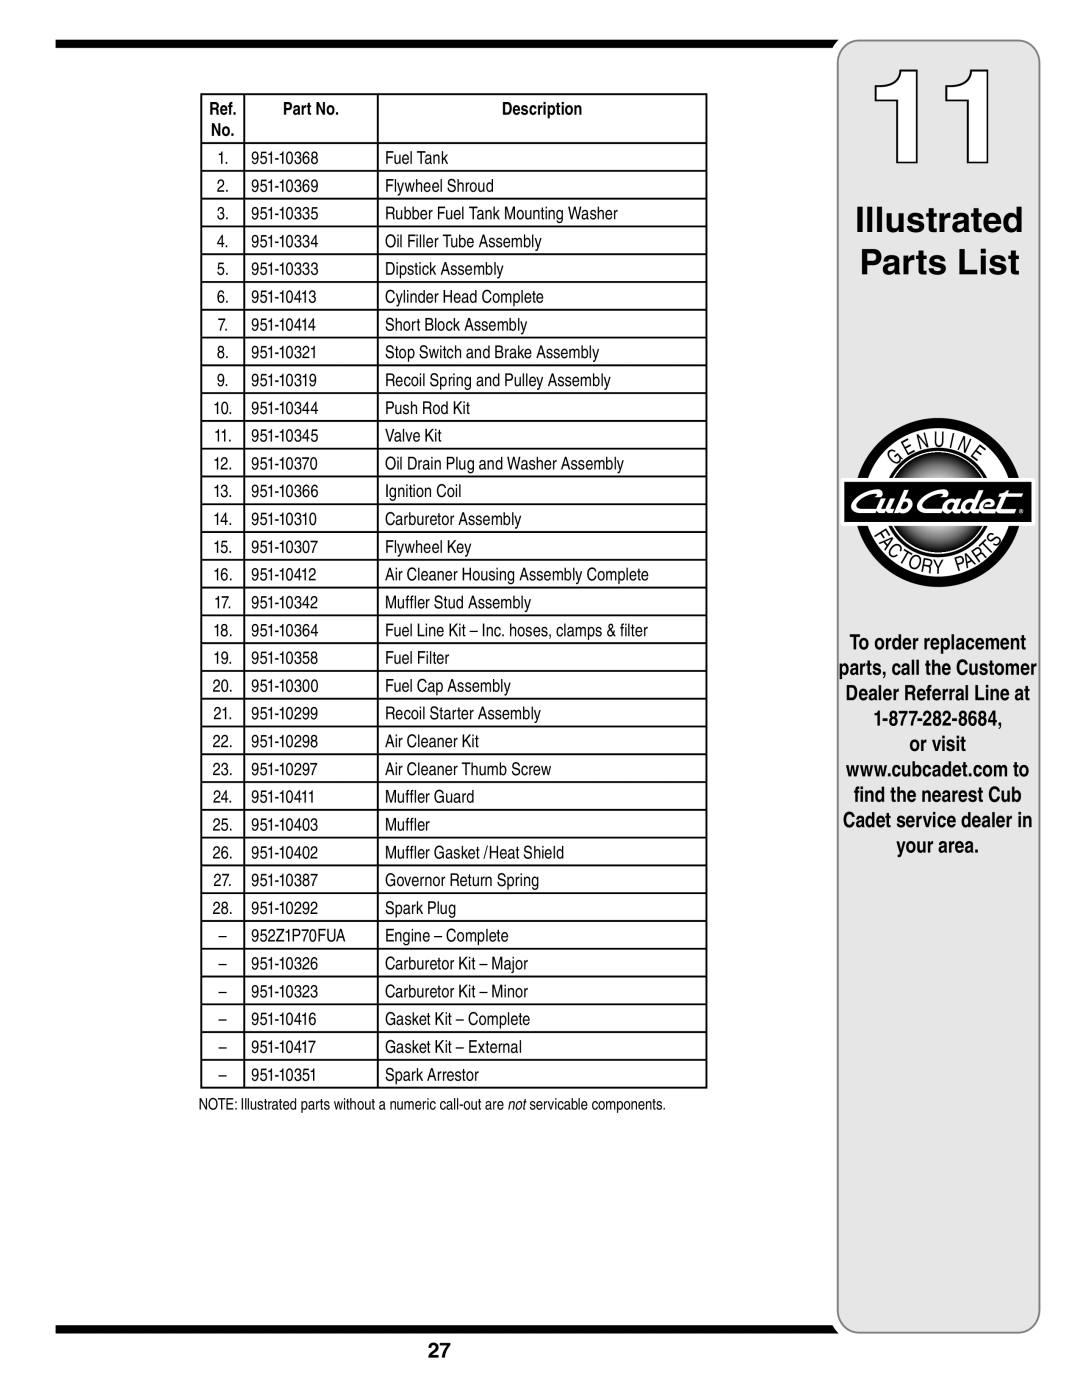 Cub Cadet 18M warranty Illustrated Parts List, Description, parts, call the Customer Dealer Referral Line at 